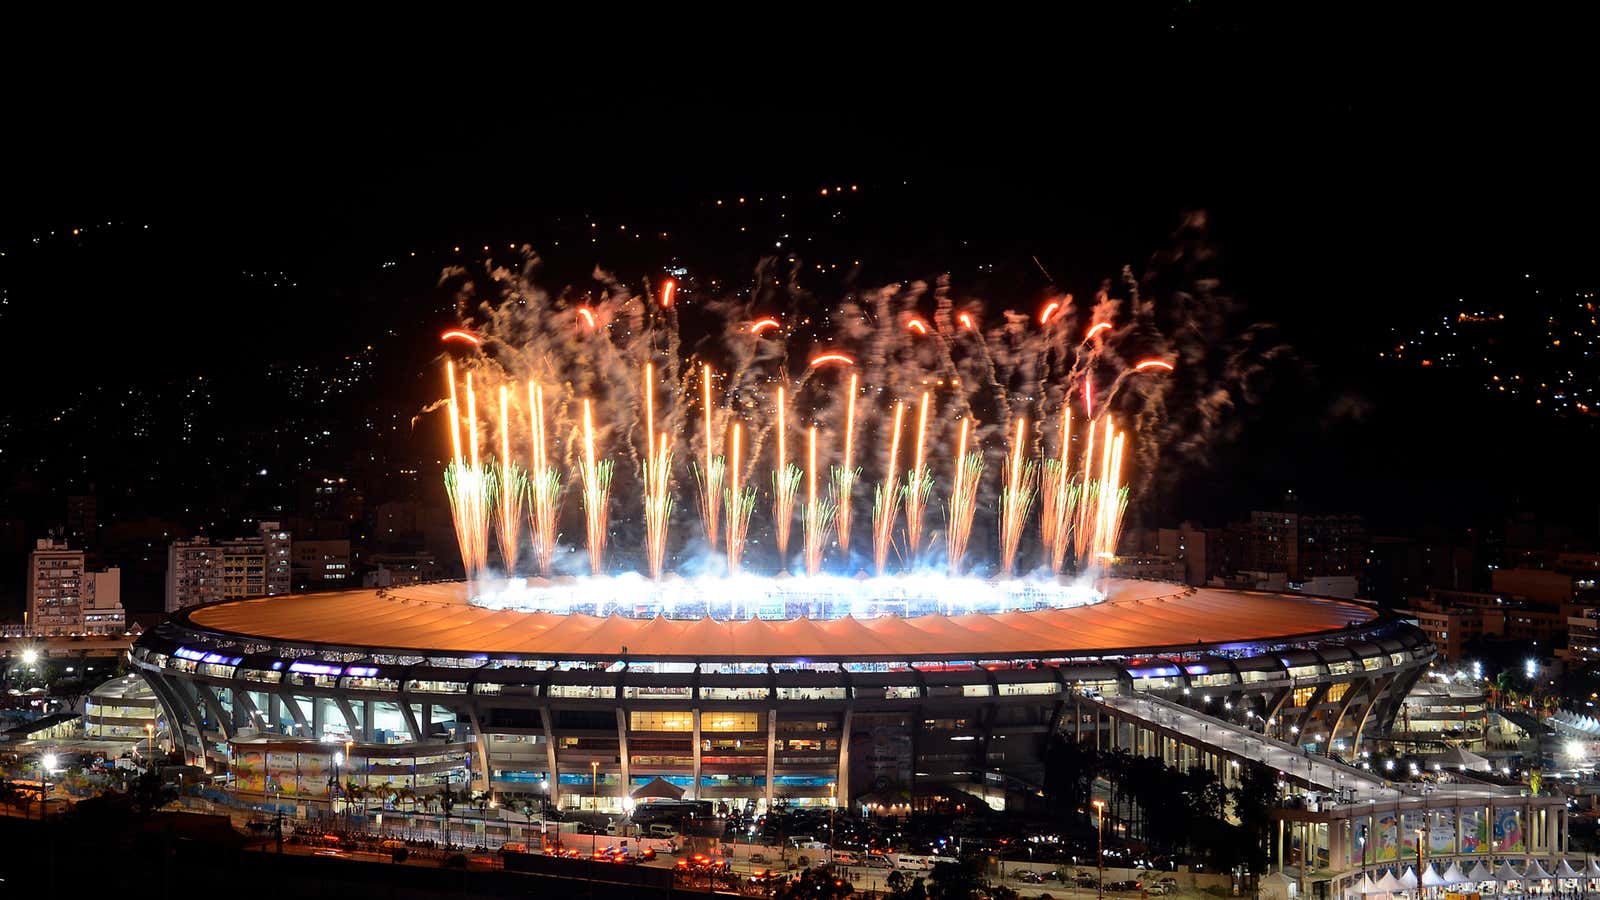 Fireworks explode over Maracana stadium in Rio de Janeiro during the 2014 World Cup.